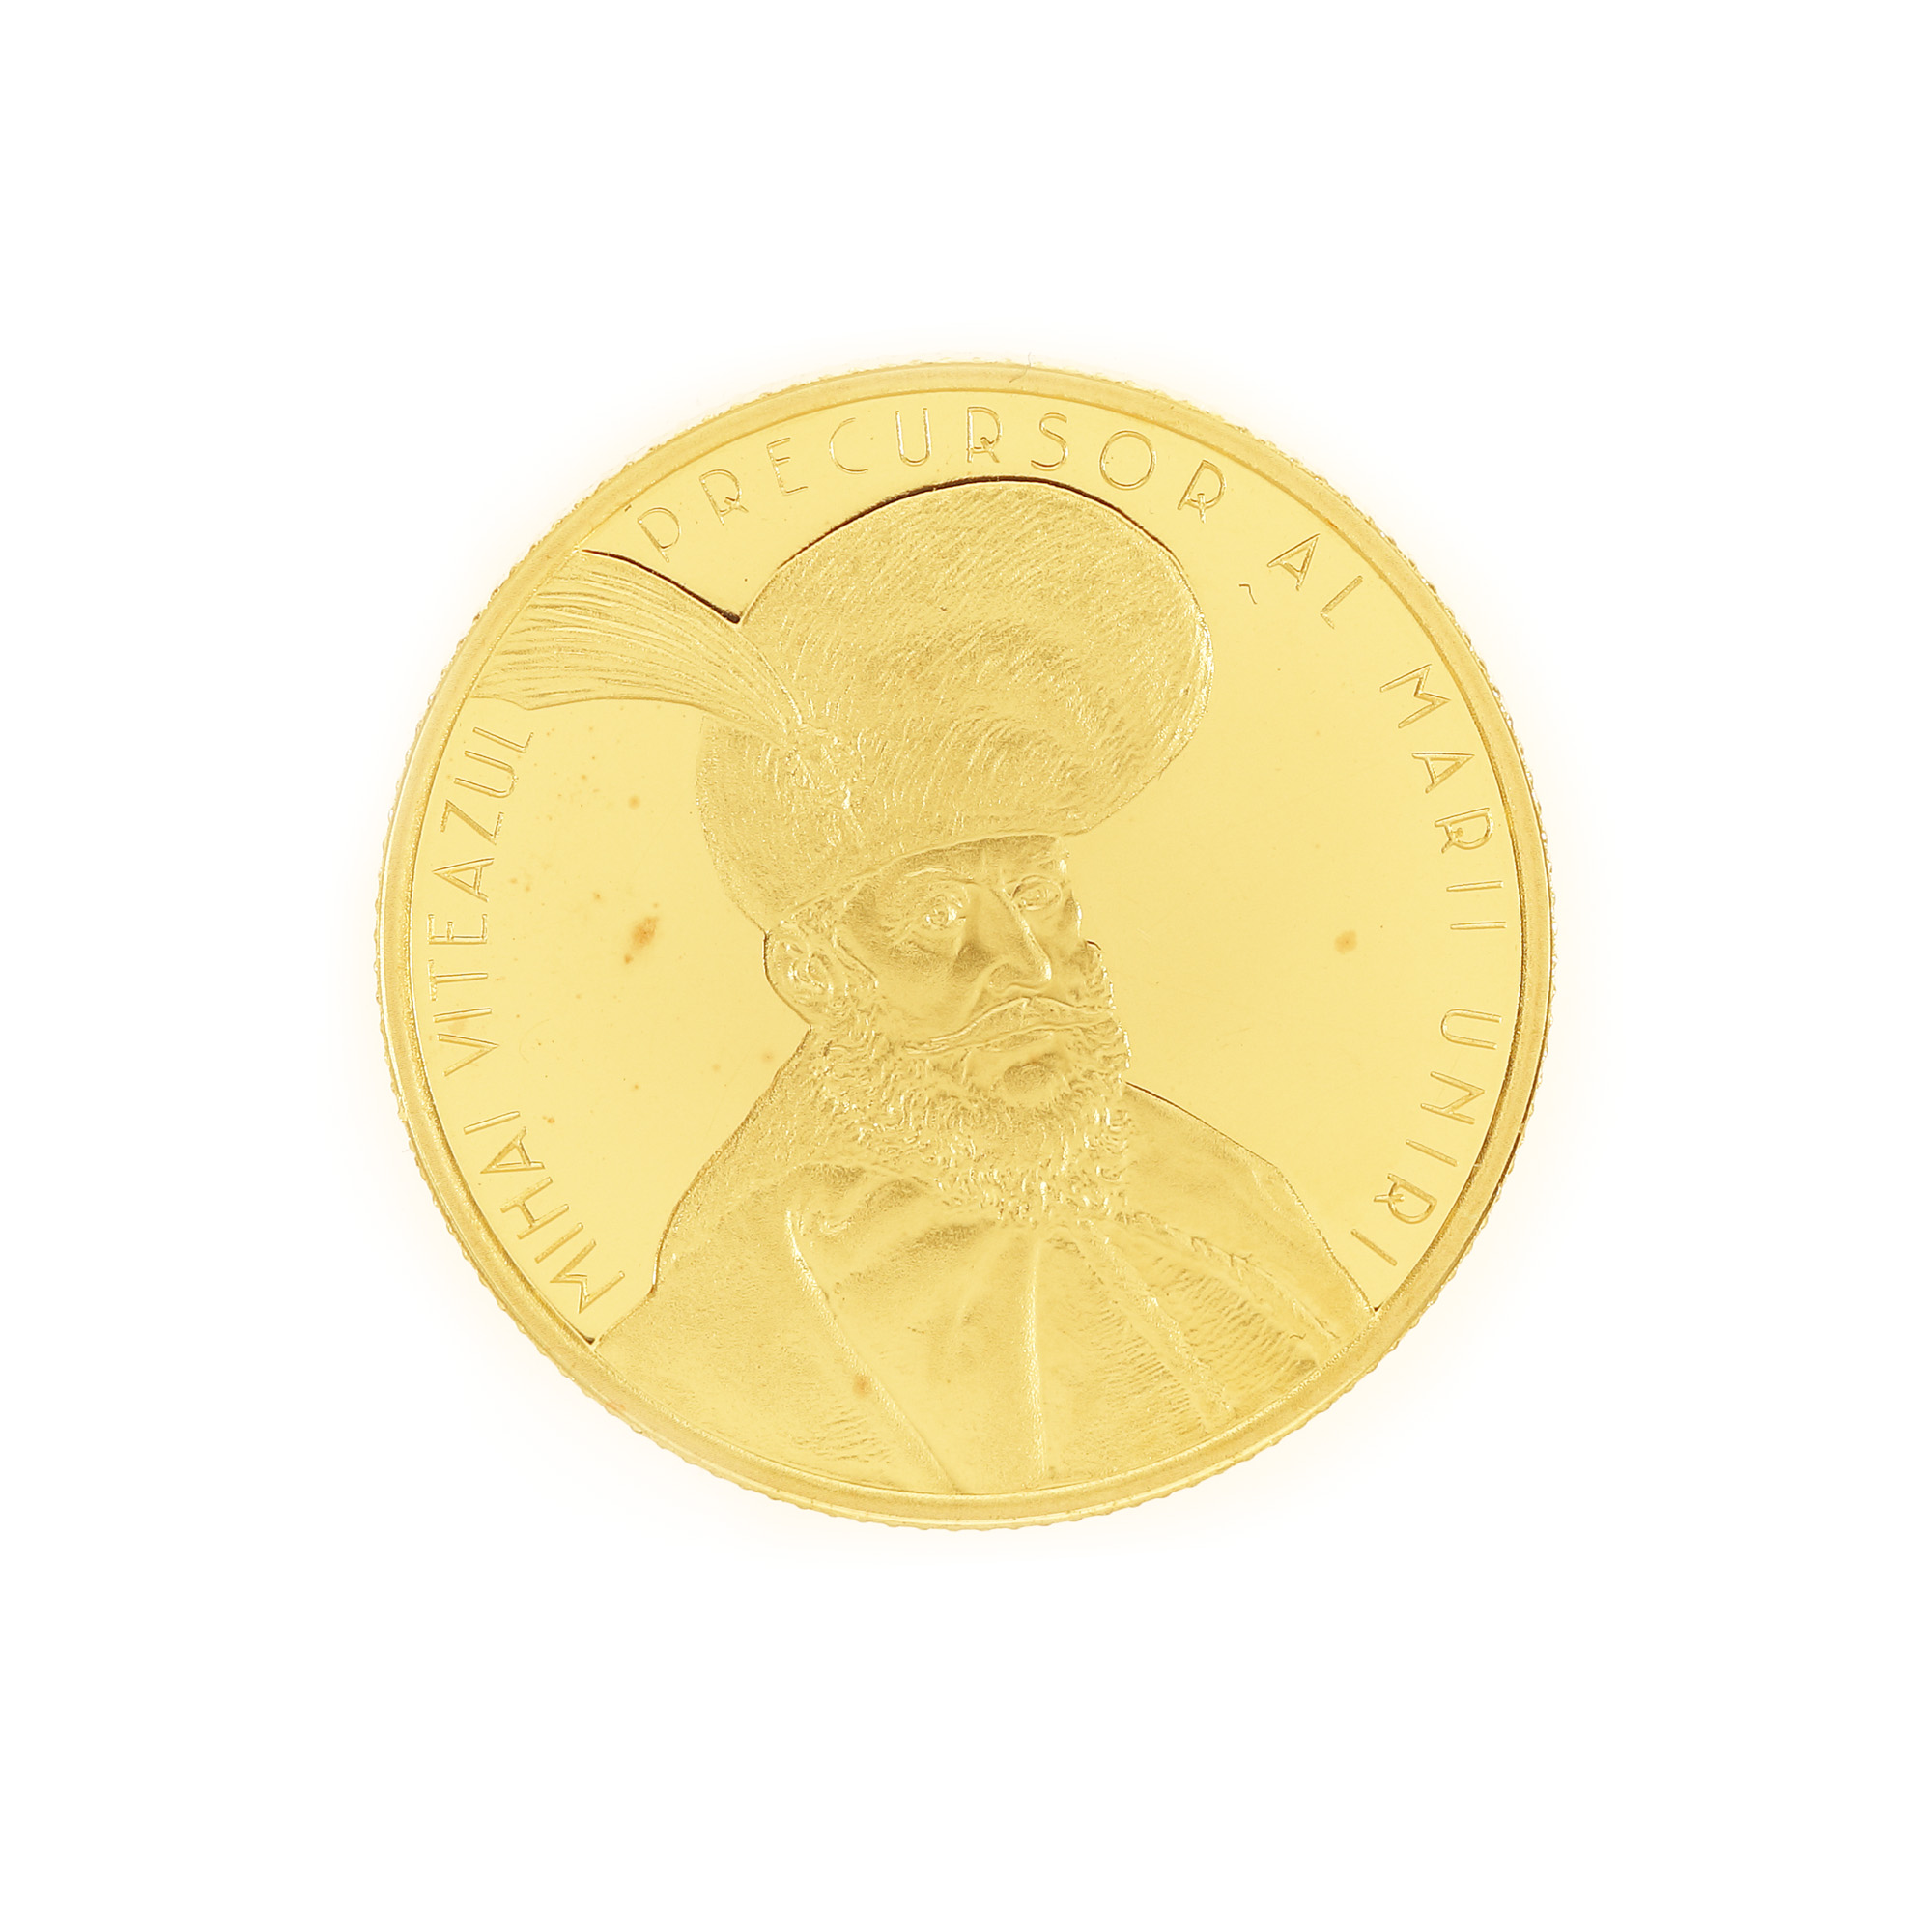 BNR commemorative coin, Michael the Brave, 2018, gold